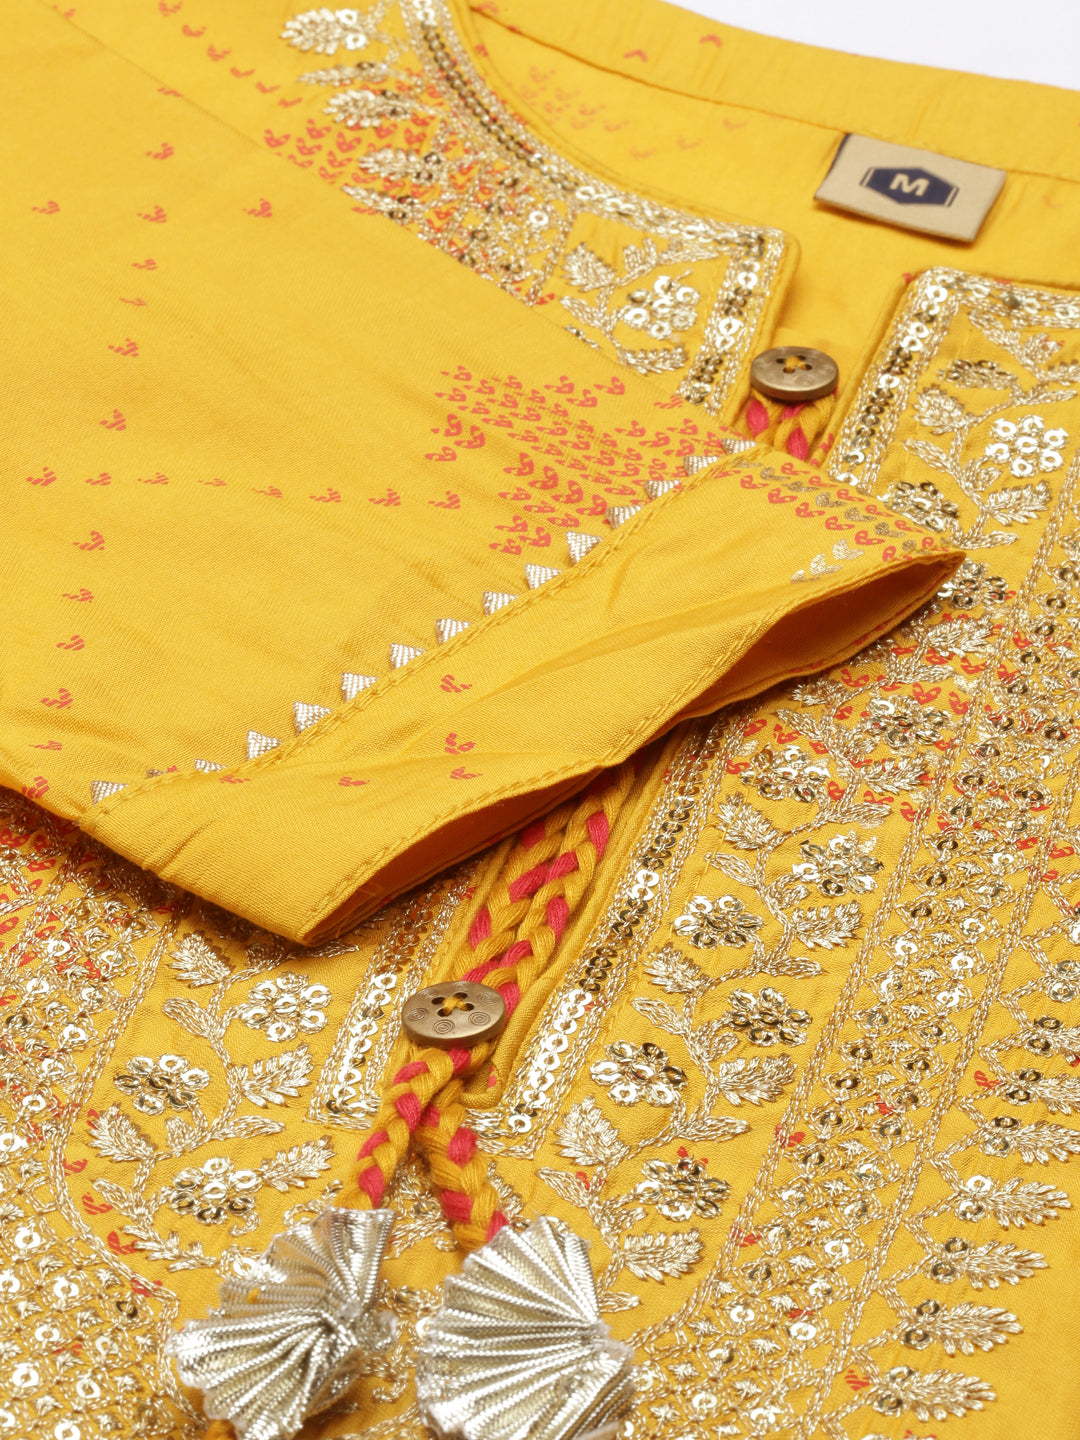 Neeru'S MUSTARD color, MODEL fabric Kurta